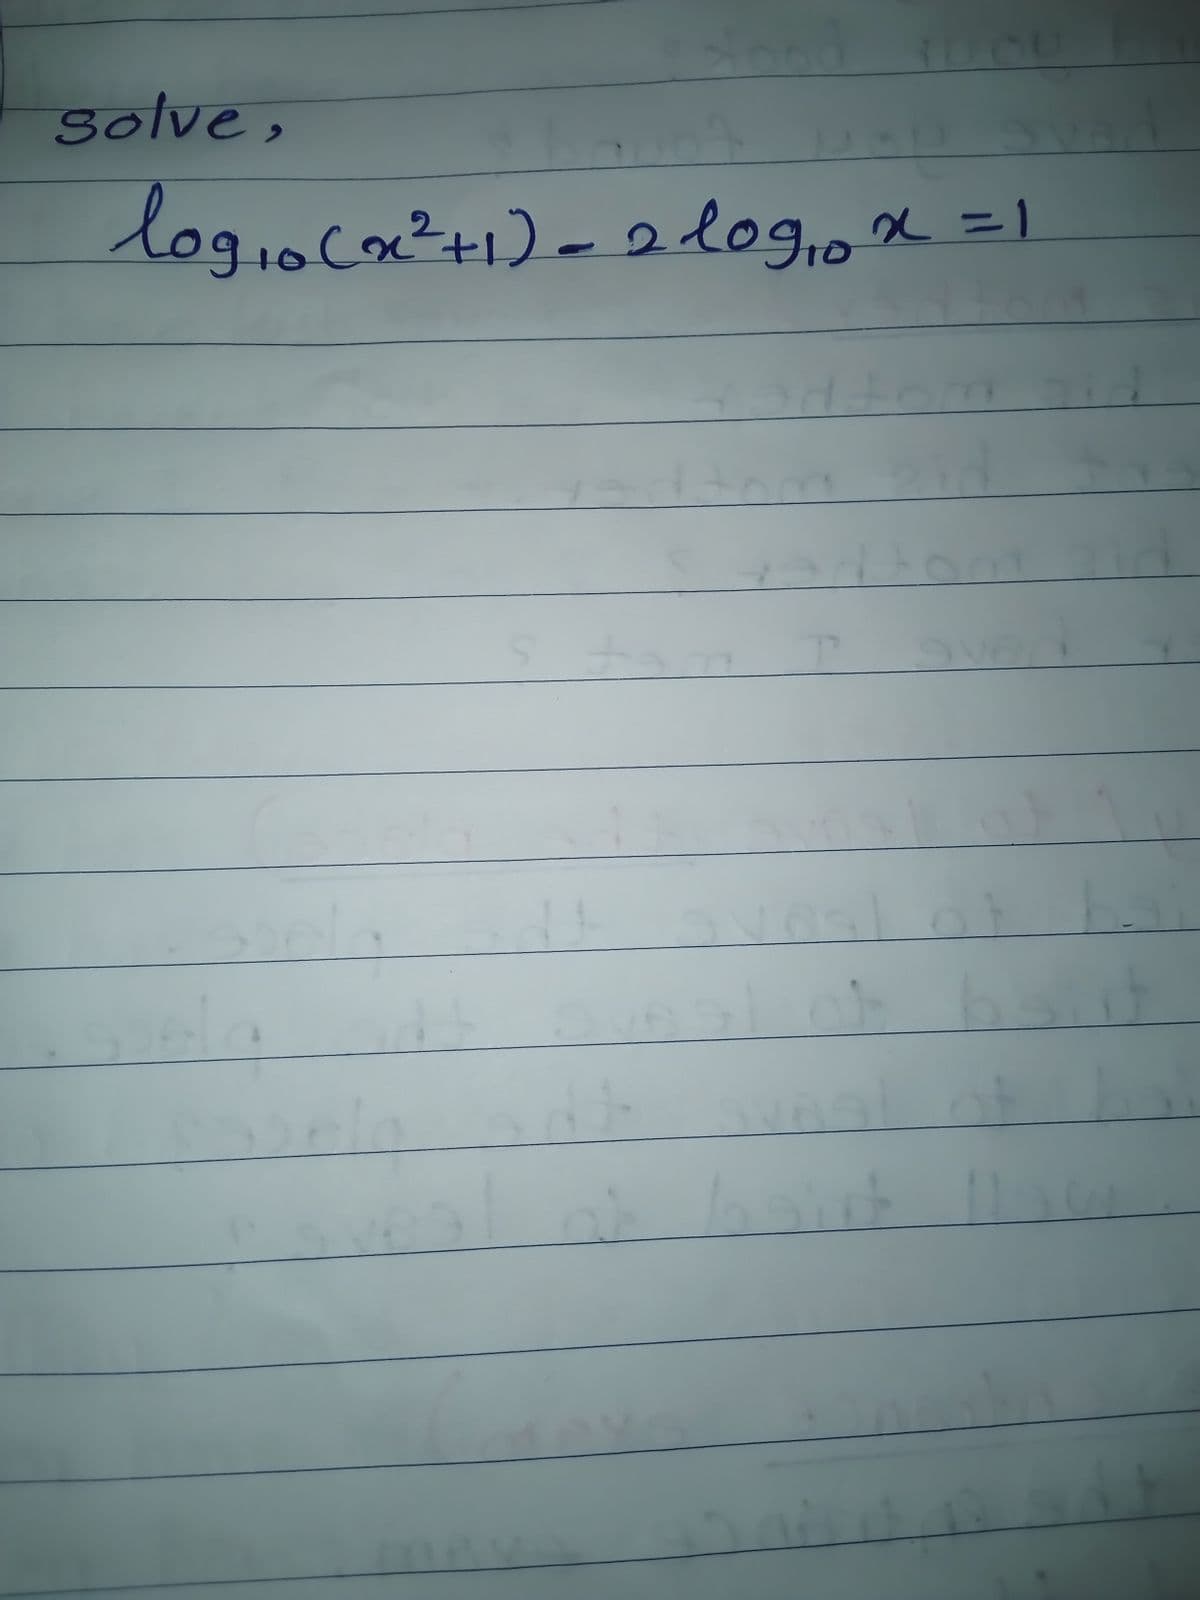 100
Solve,
logiocom²+1)-2logiox =1
